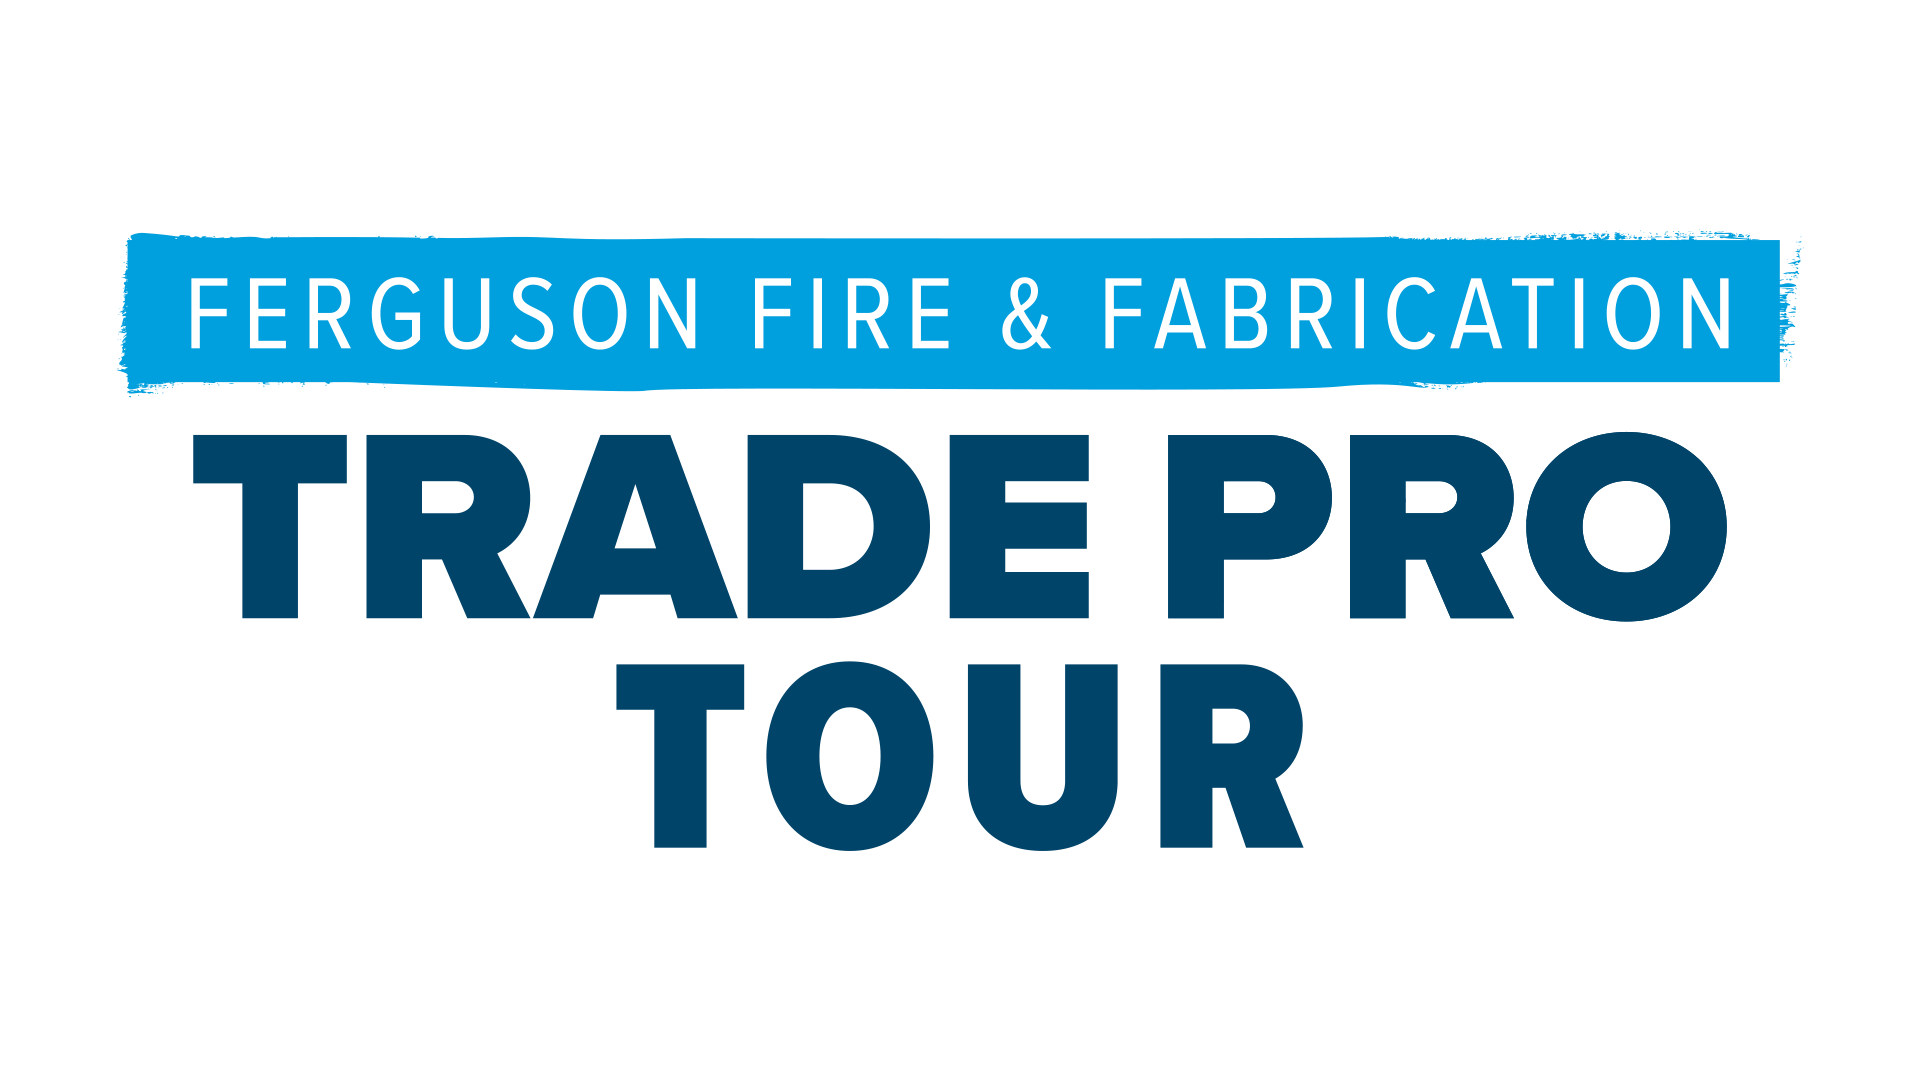 Ferguson Fire and Fabrication Trade Pro Tour logo